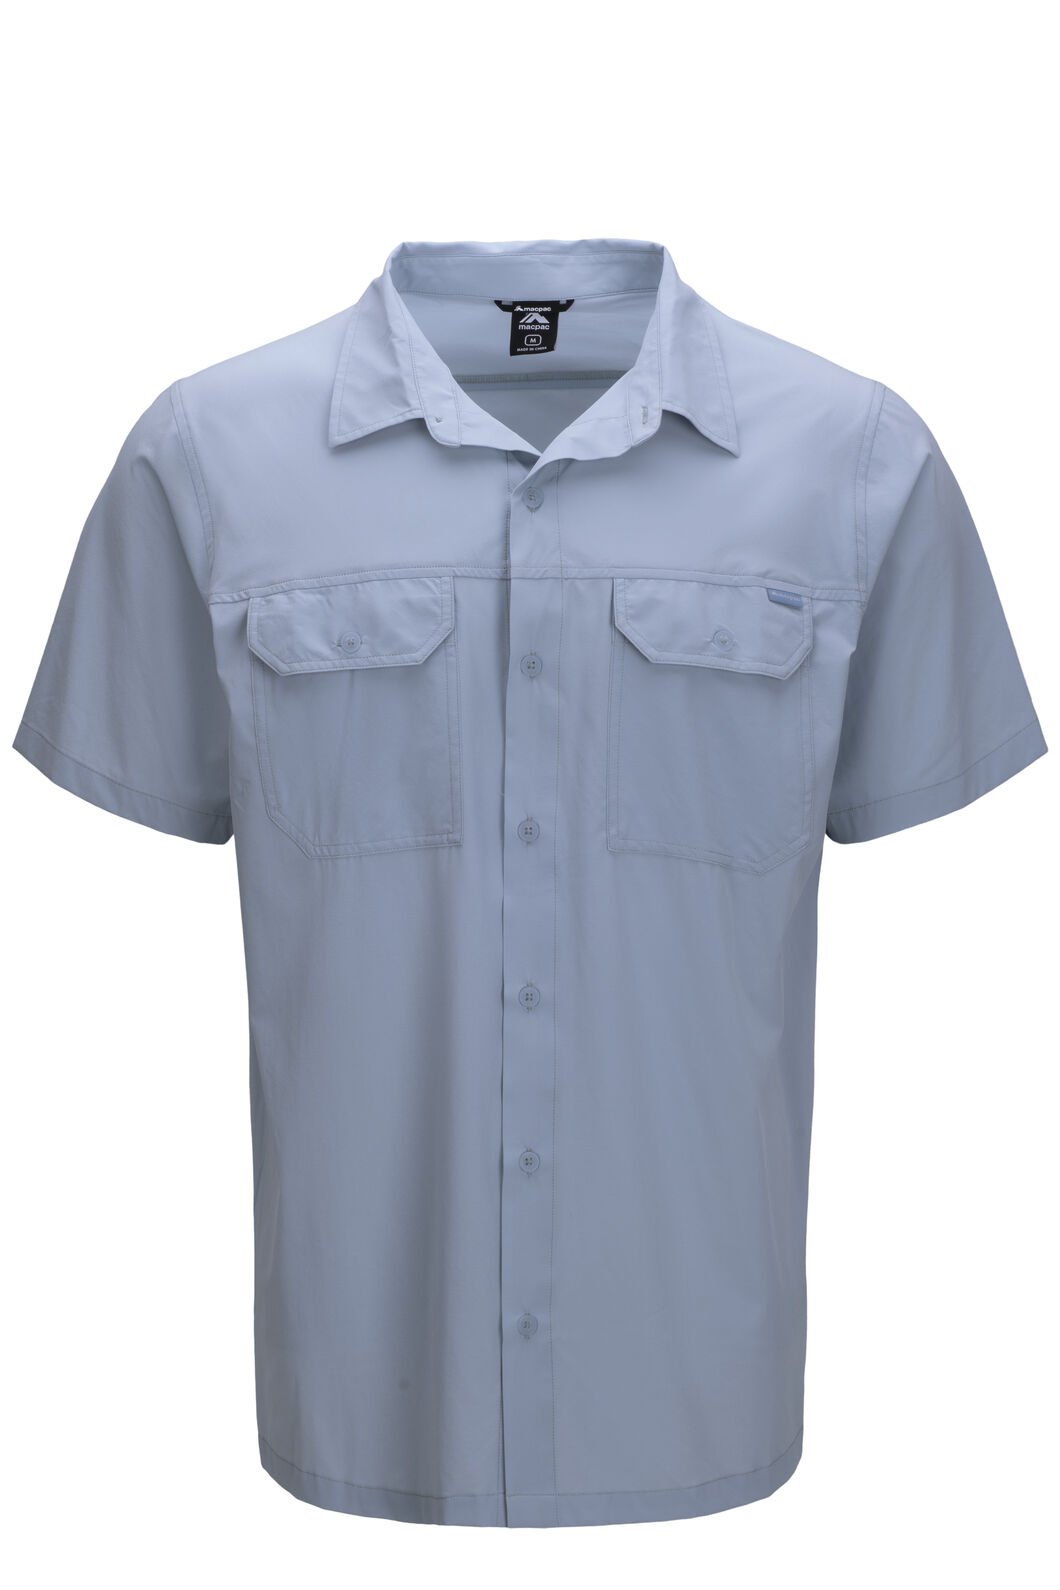 Macpac Men's Eclipse Short Sleeve Shirt | Macpac